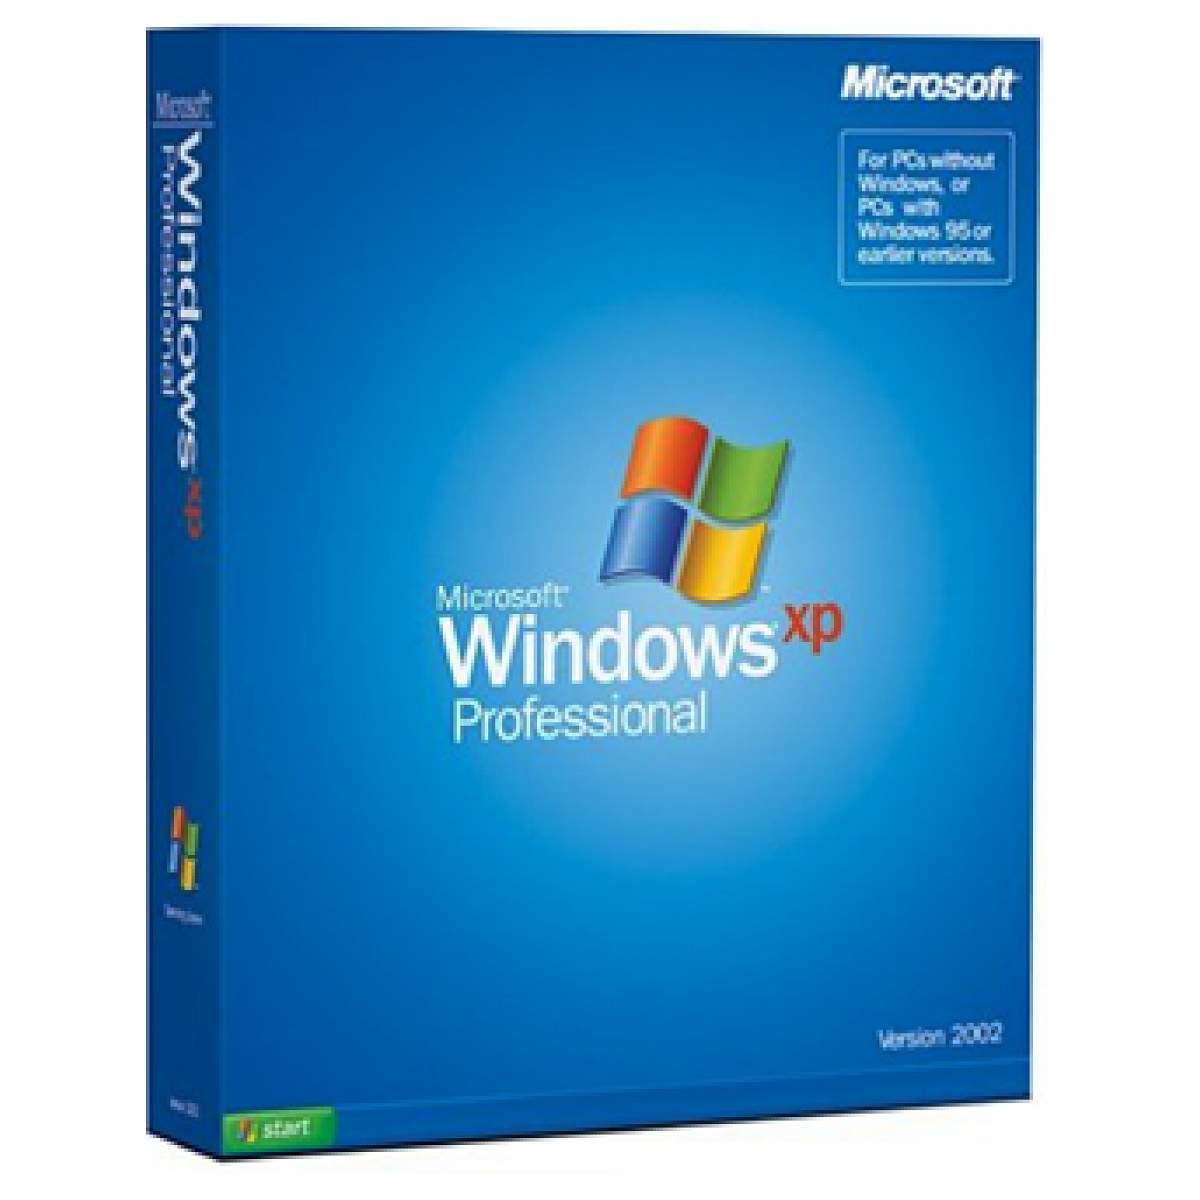 windows 7 professional iso